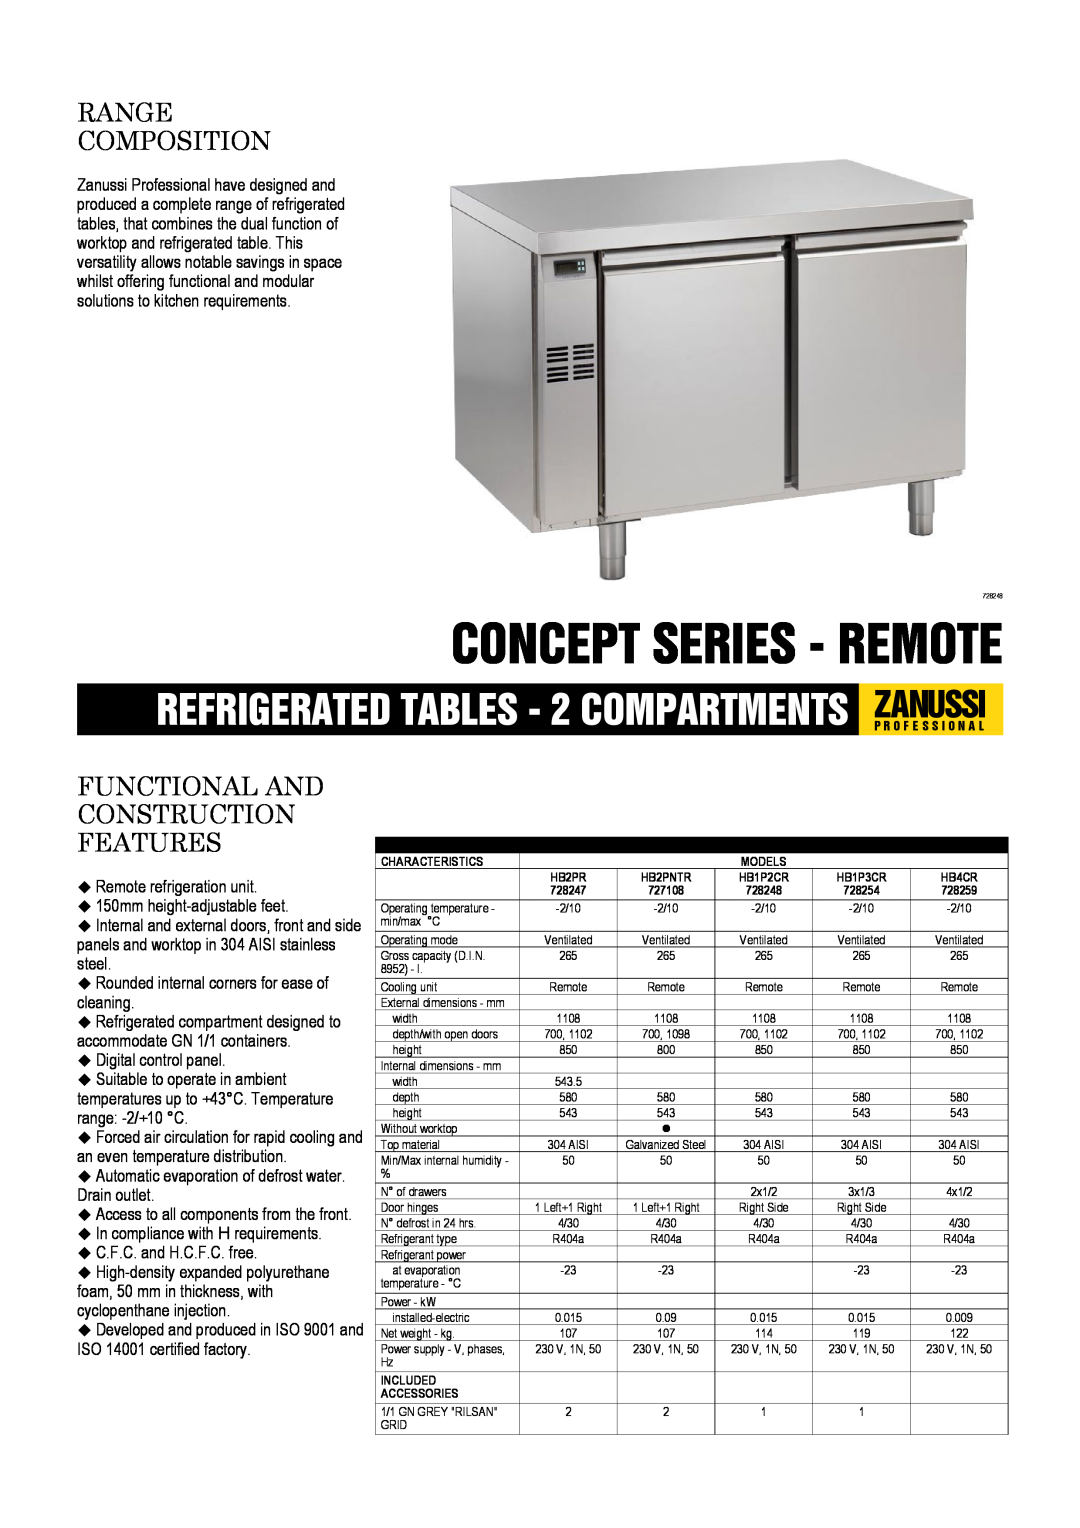 Zanussi 728254, HB2PR dimensions Zanussi, Concept Series - Remote, REFRIGERATED TABLES - 2 COMPARTMENTS, Range Composition 